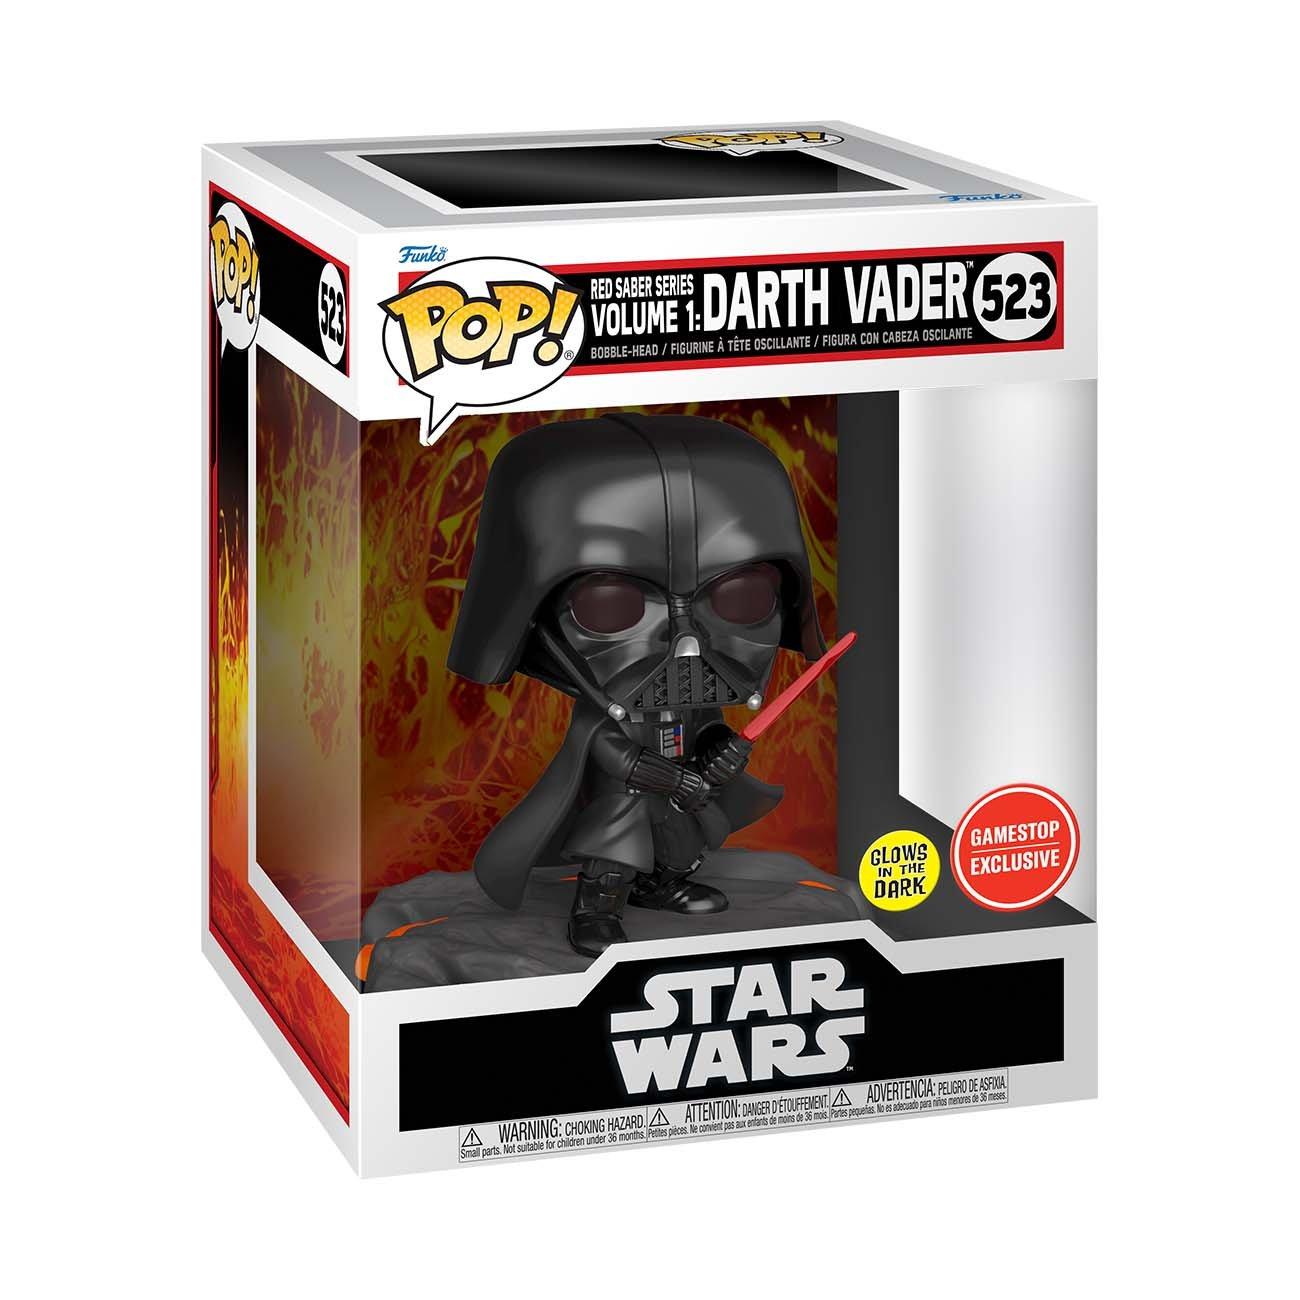 https://media.gamestop.com/i/gamestop/20000870_ALT02/Funko-POP-Star-Wars-Red-Saber-Series-Volume-1-Darth-Vader-4.6-in-Vinyl-Bobblehead-GameStop-Exclusive?$pdp$